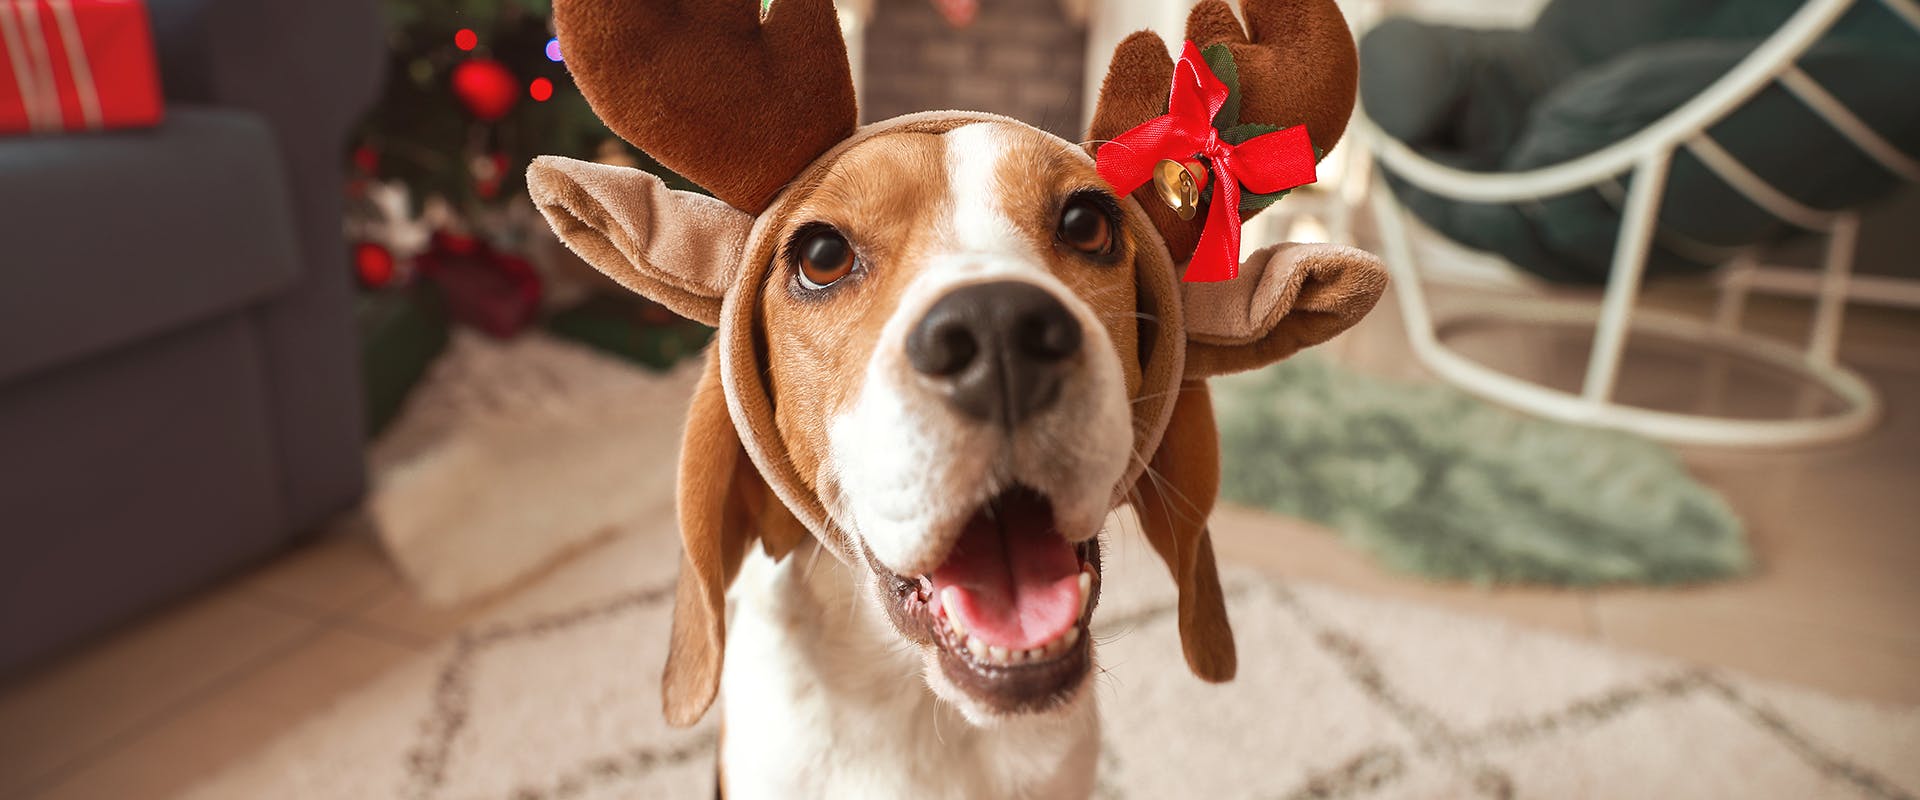 A happy dog wearing a reindeer headband